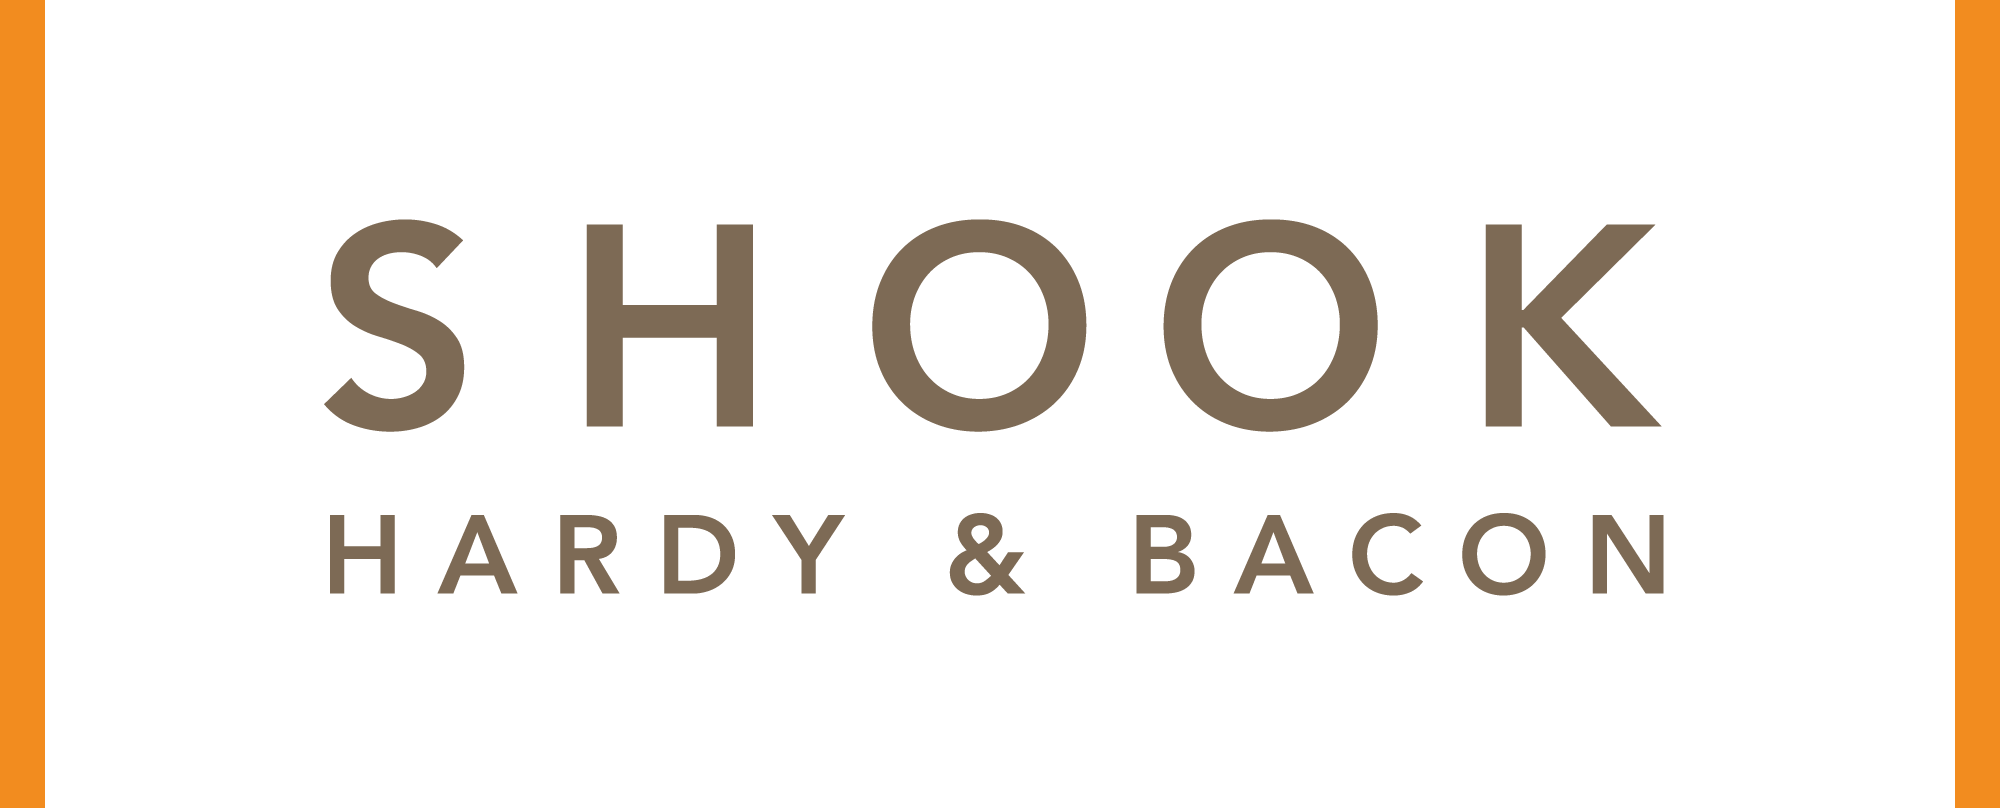 Shook Hardy Logo